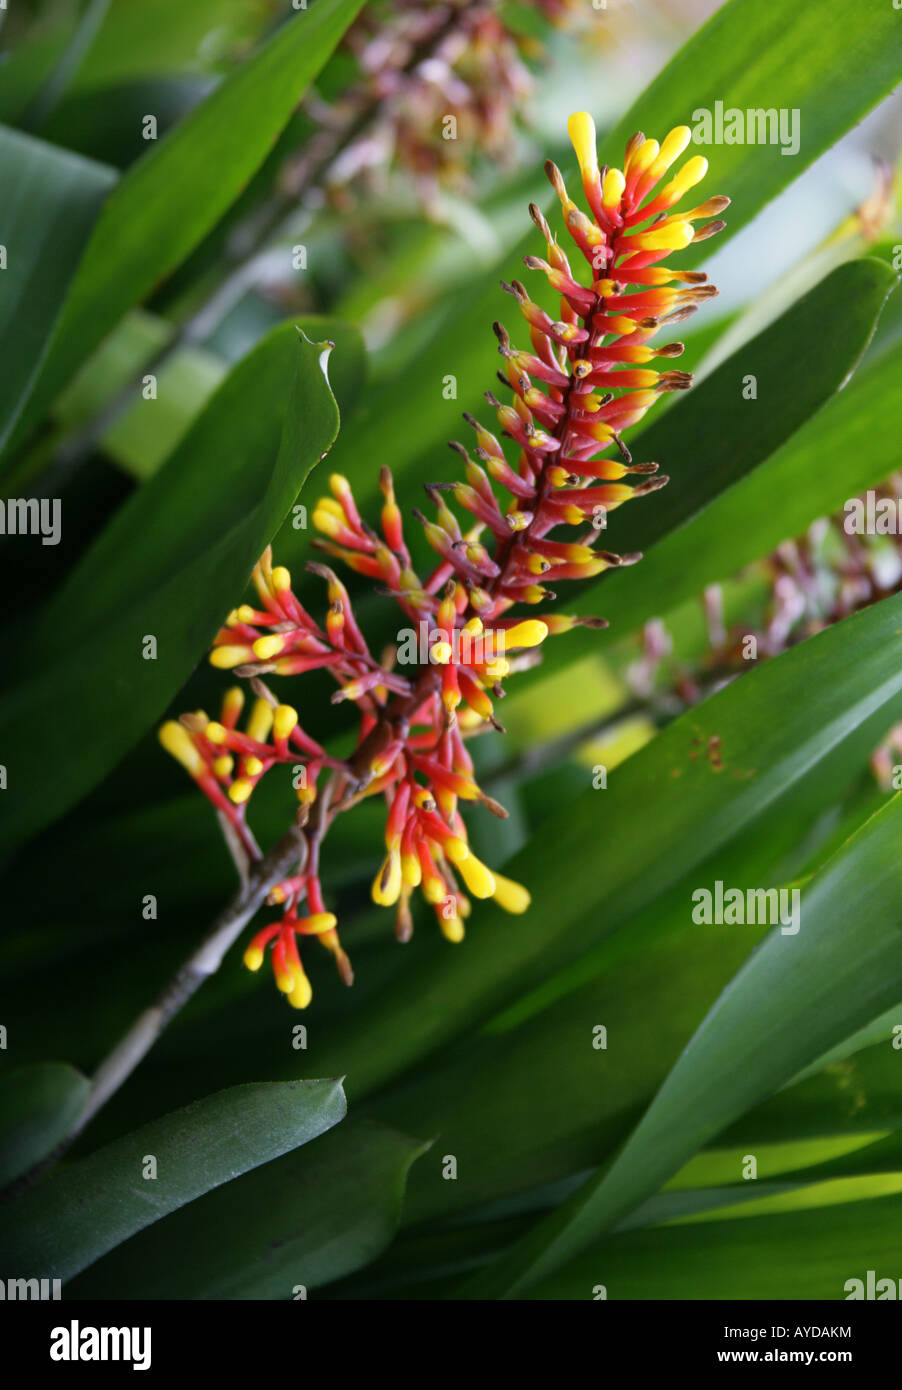 Aechmea winkleri, Bromeliaceae, bromeliad, Brasile, Sud America Foto Stock